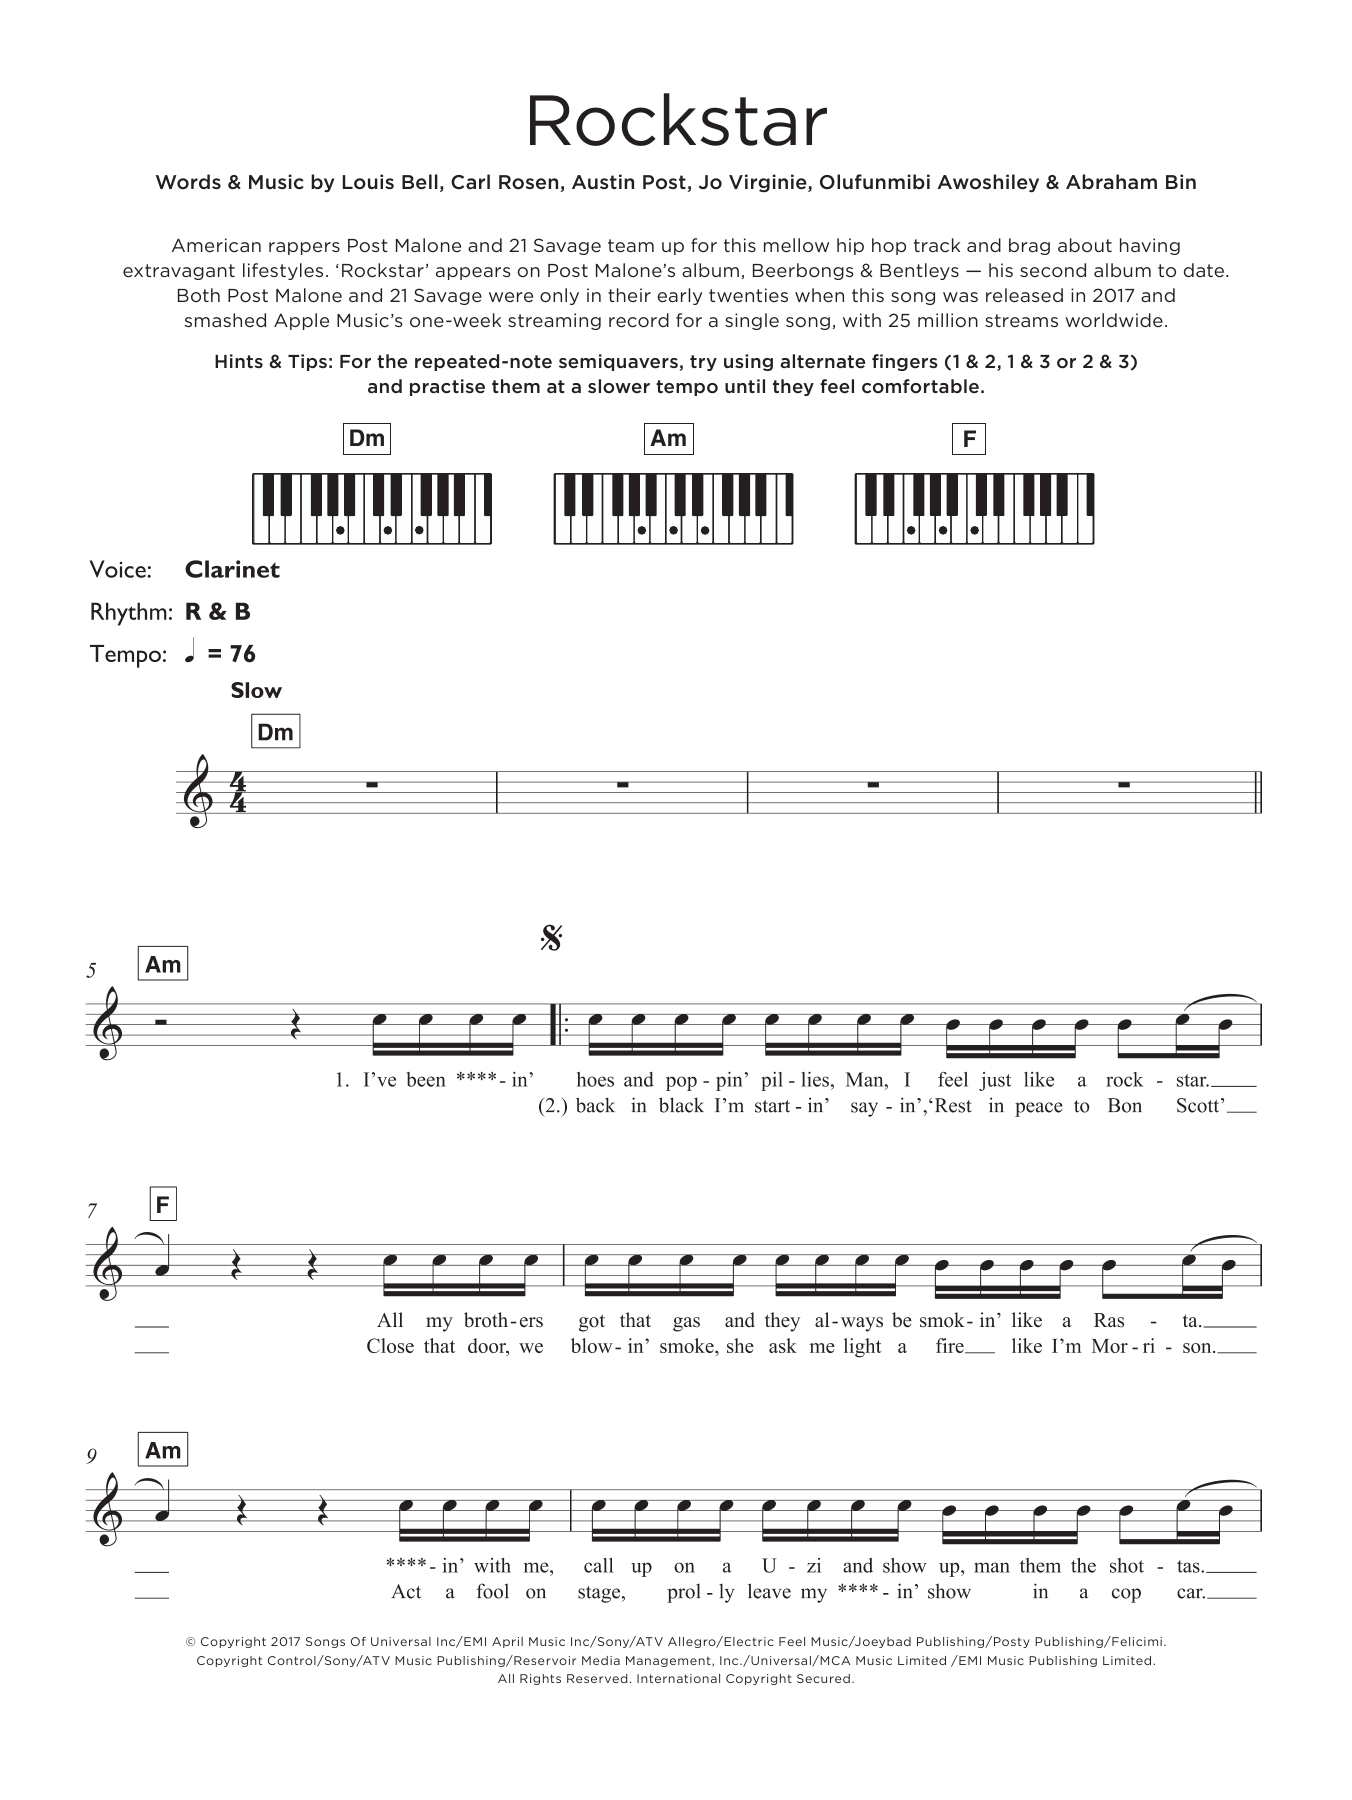 Post Malone Rockstar (featuring 21 Savage) Sheet Music Notes & Chords for Beginner Ukulele - Download or Print PDF